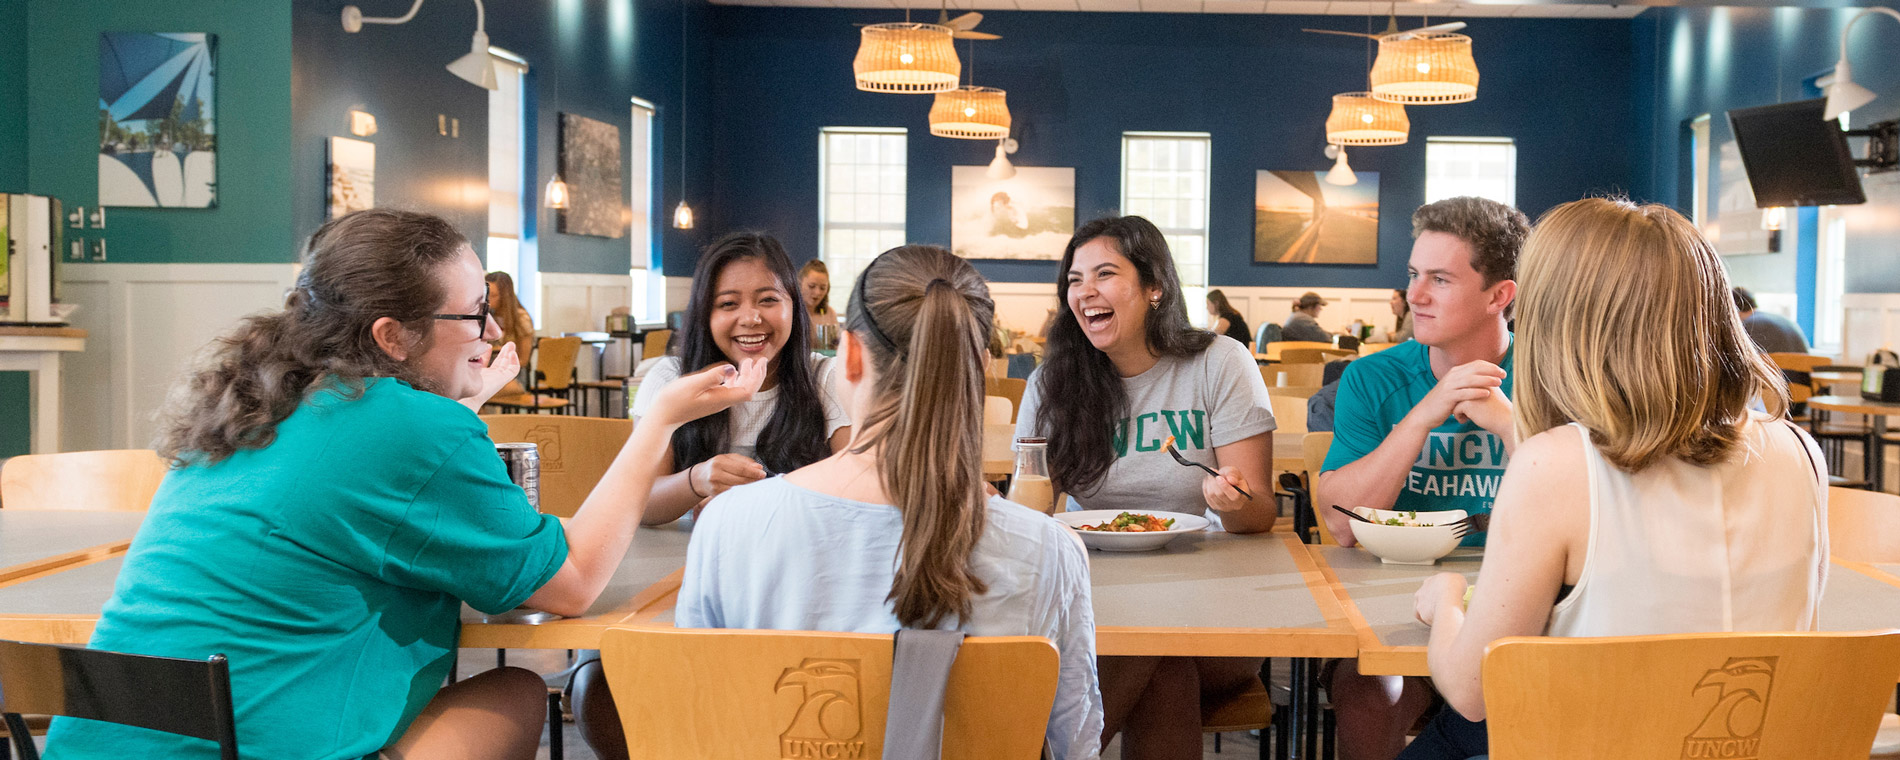 Students dining together at Wagoner hall